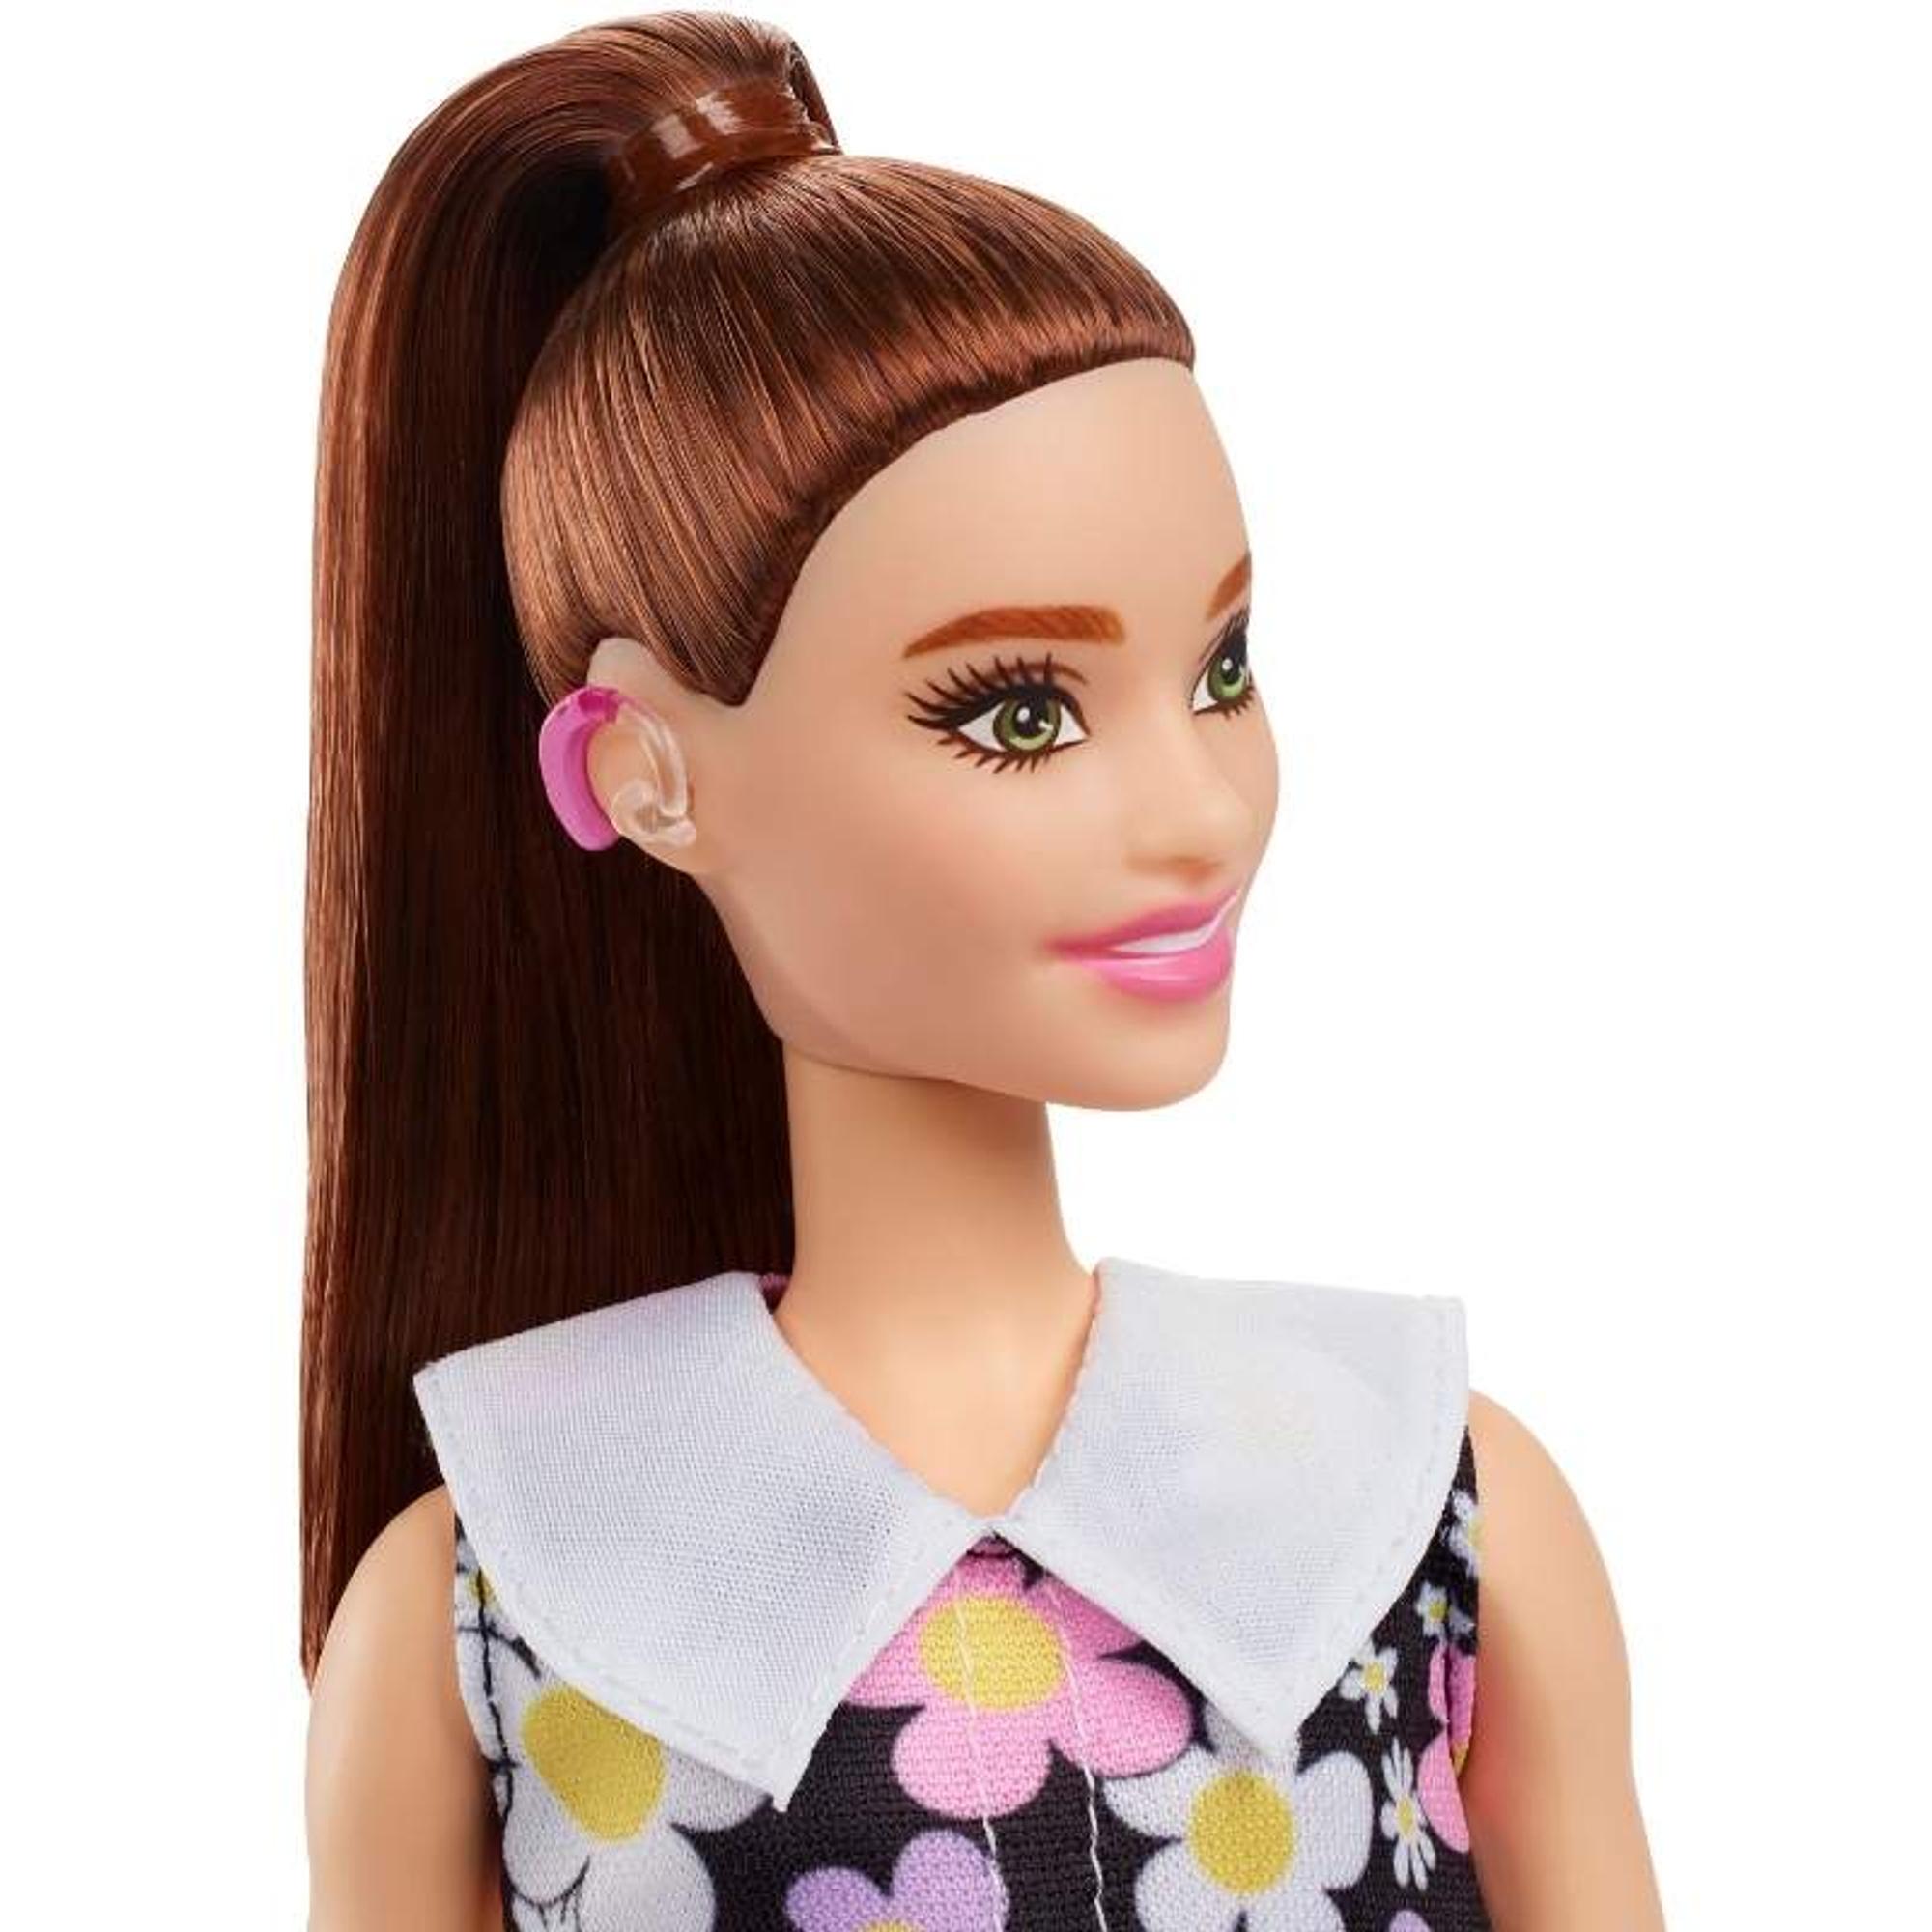 Barbie-Puppe mit Hörgerät am Ohr